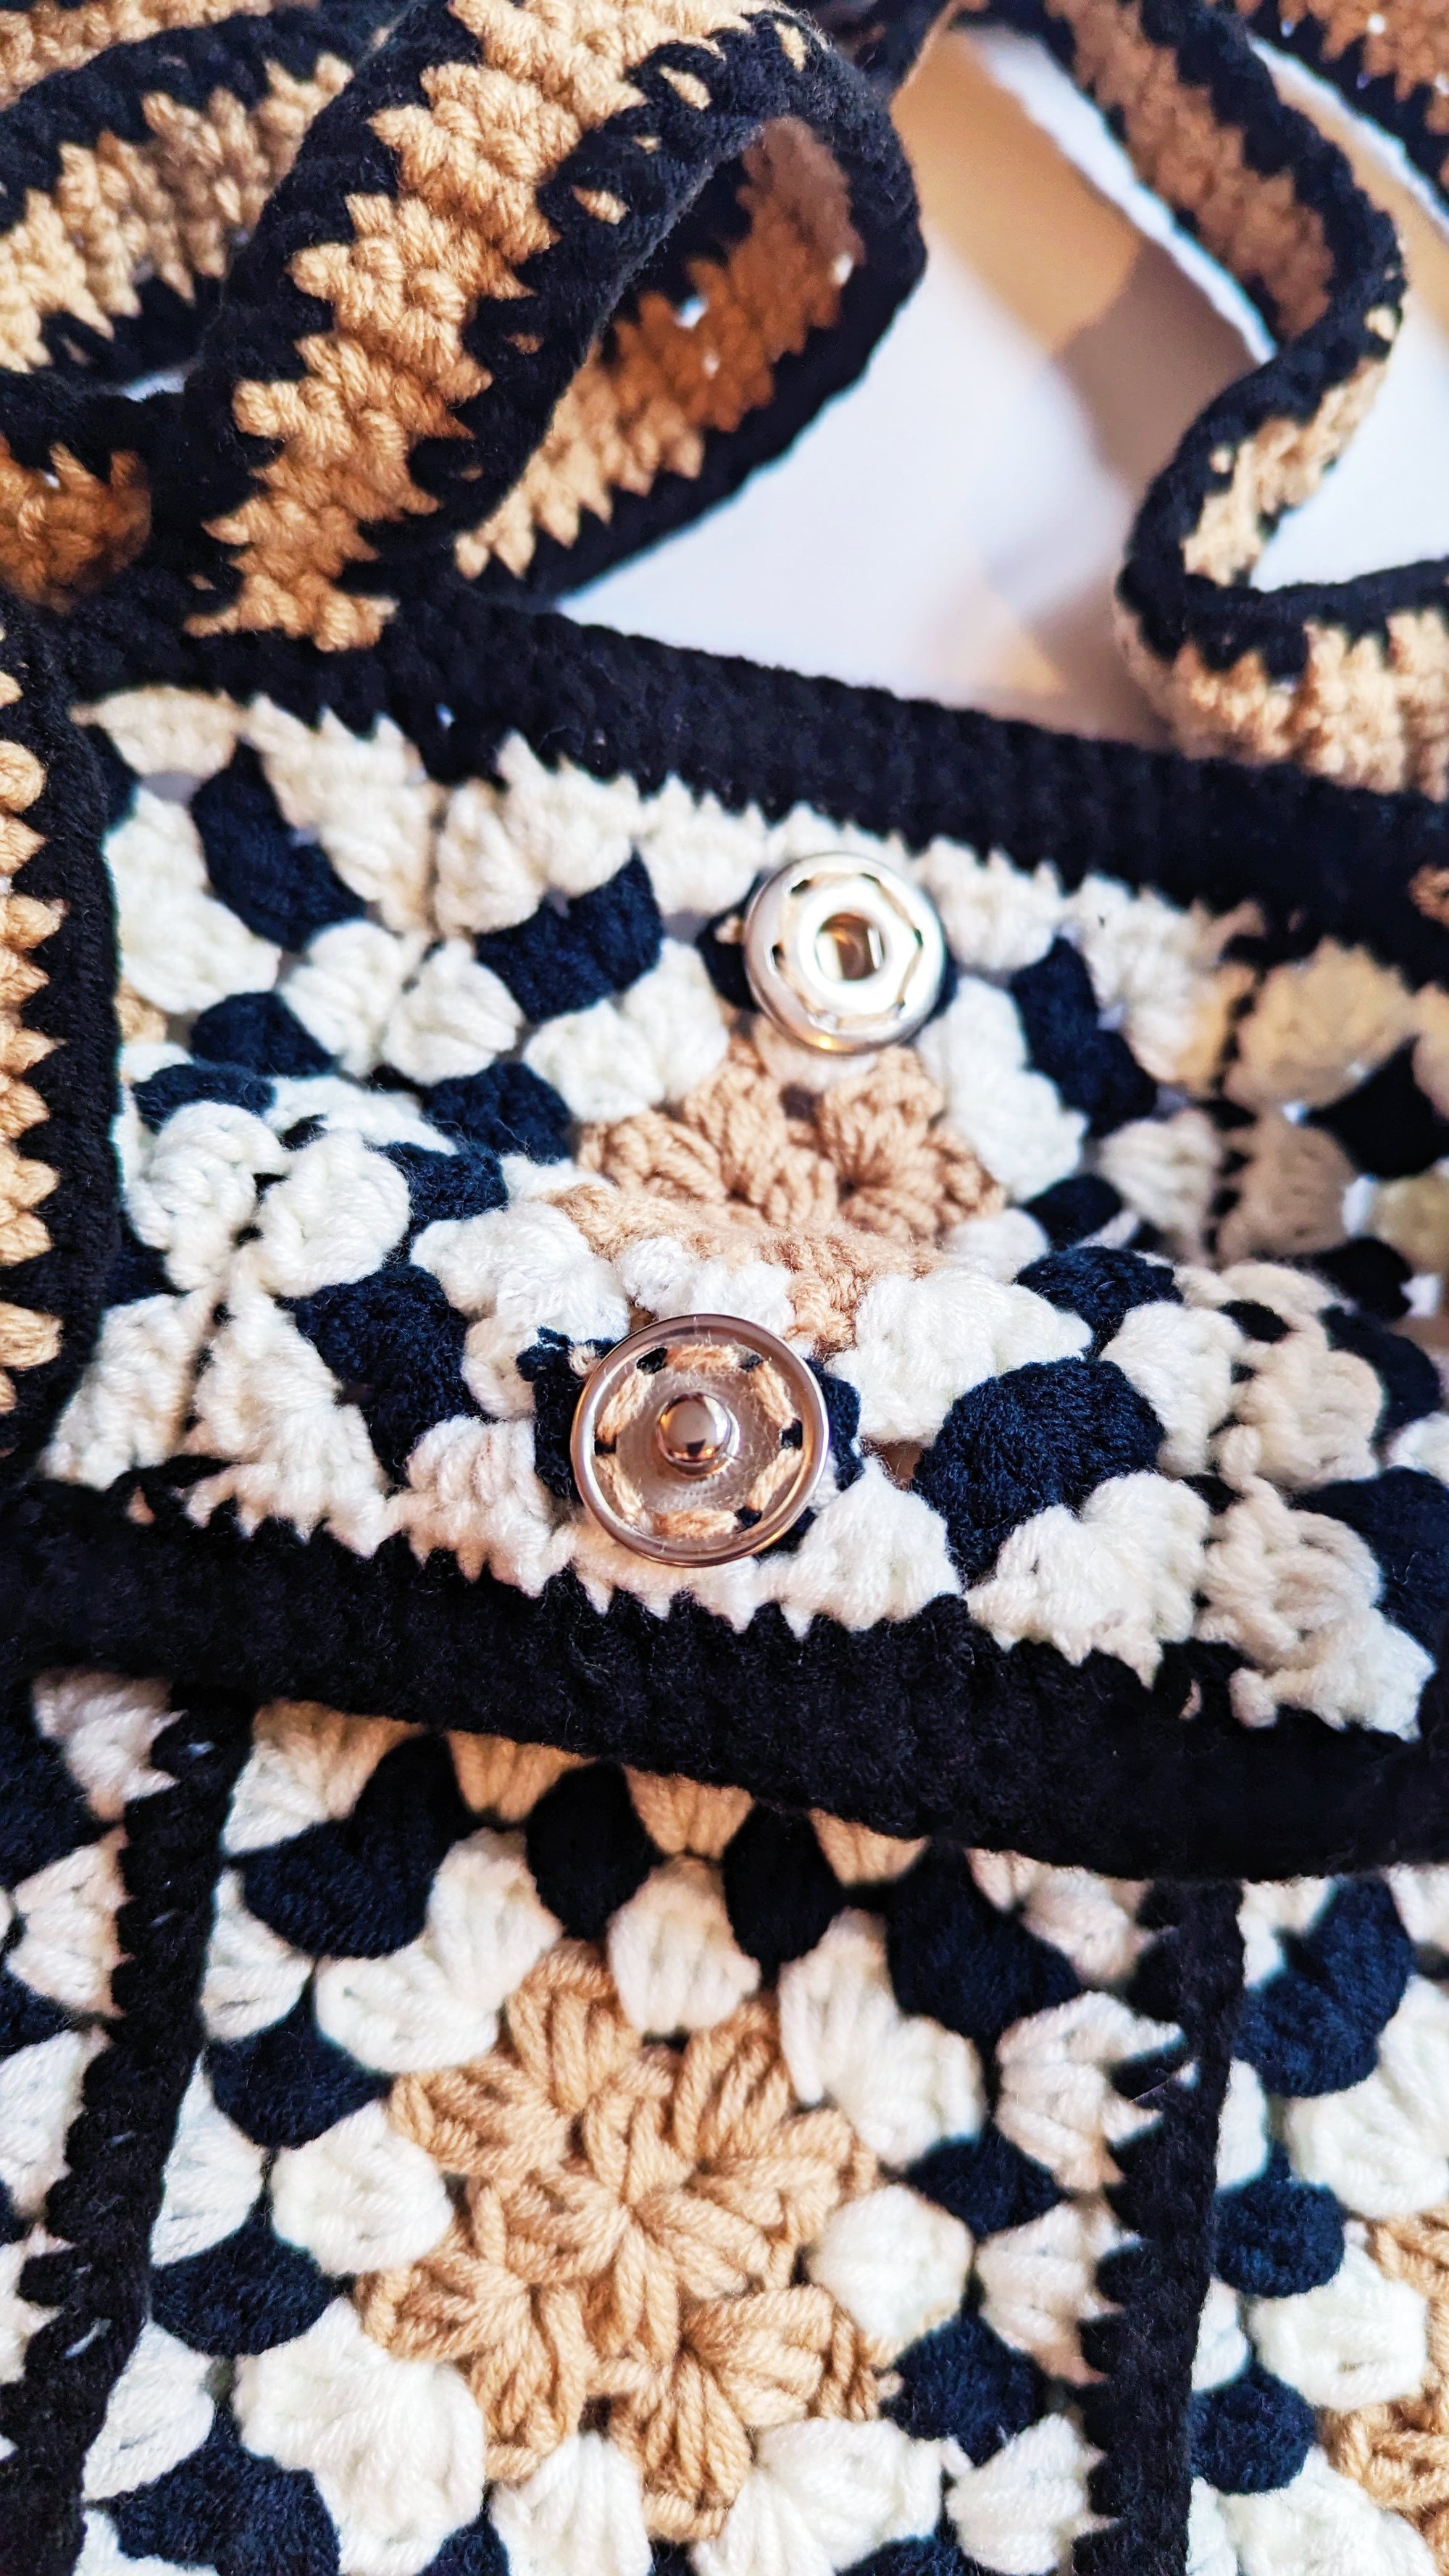 Neutral Tone Granny Square Crochet Bag